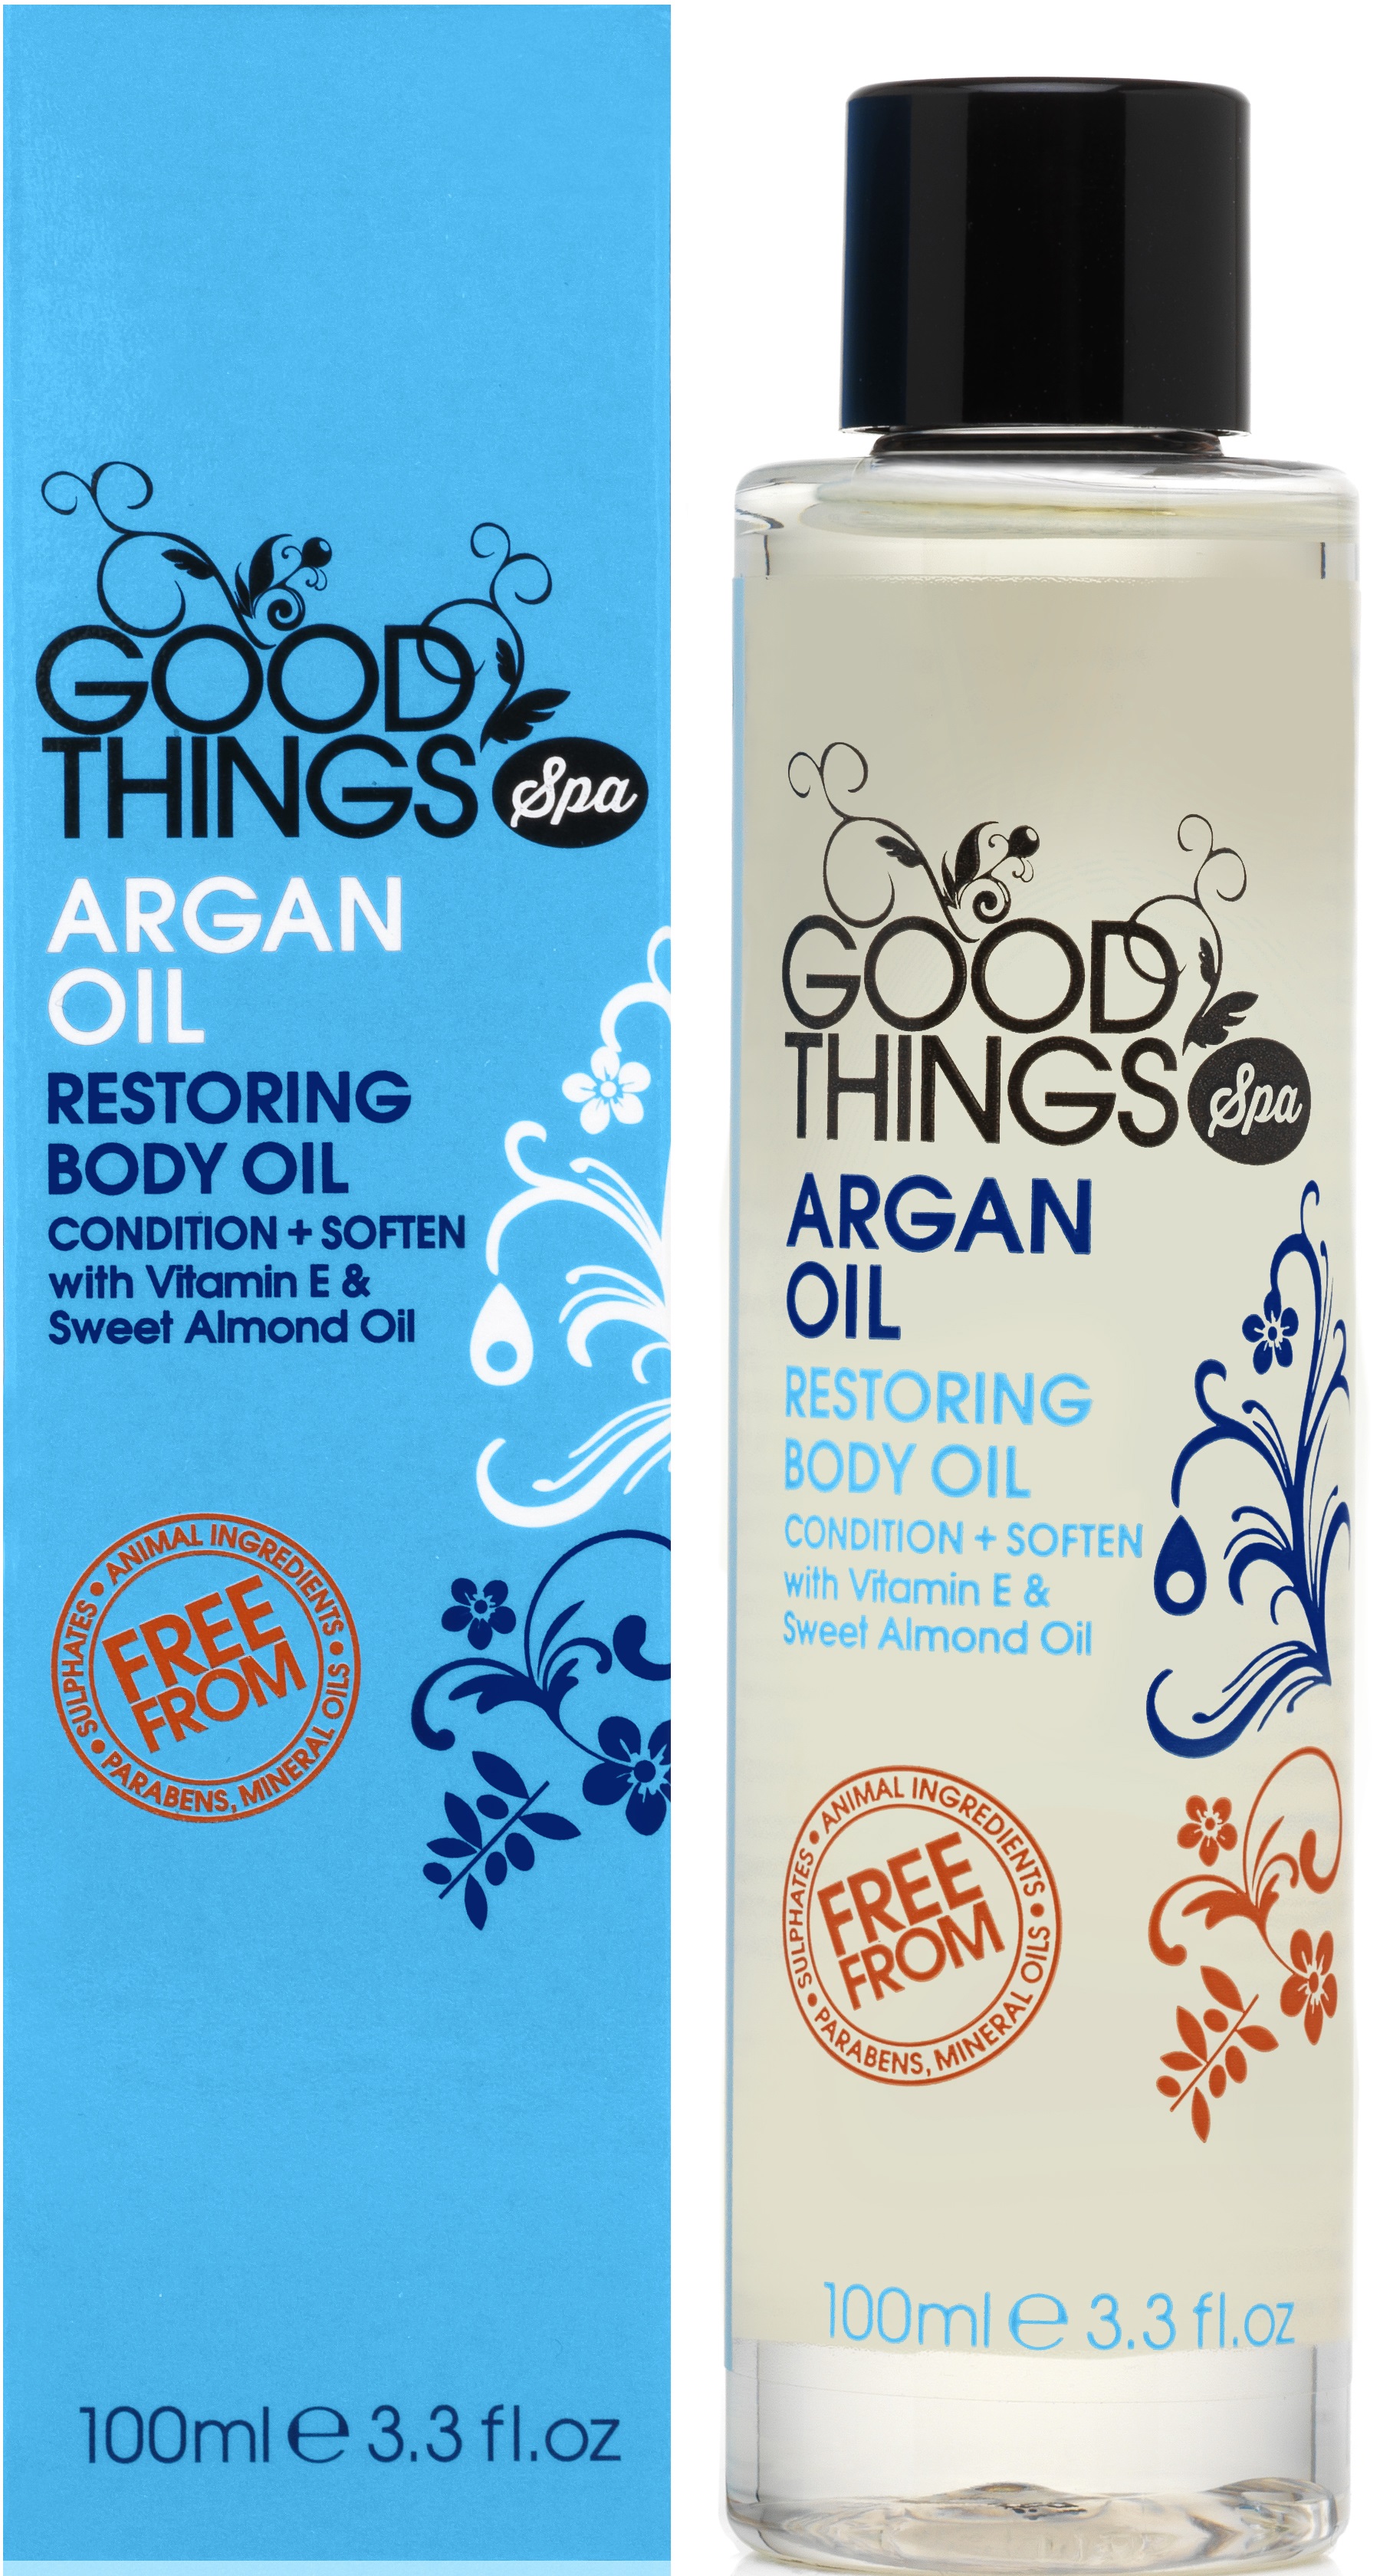 Good Things Argan Oil Body Oil 100ml